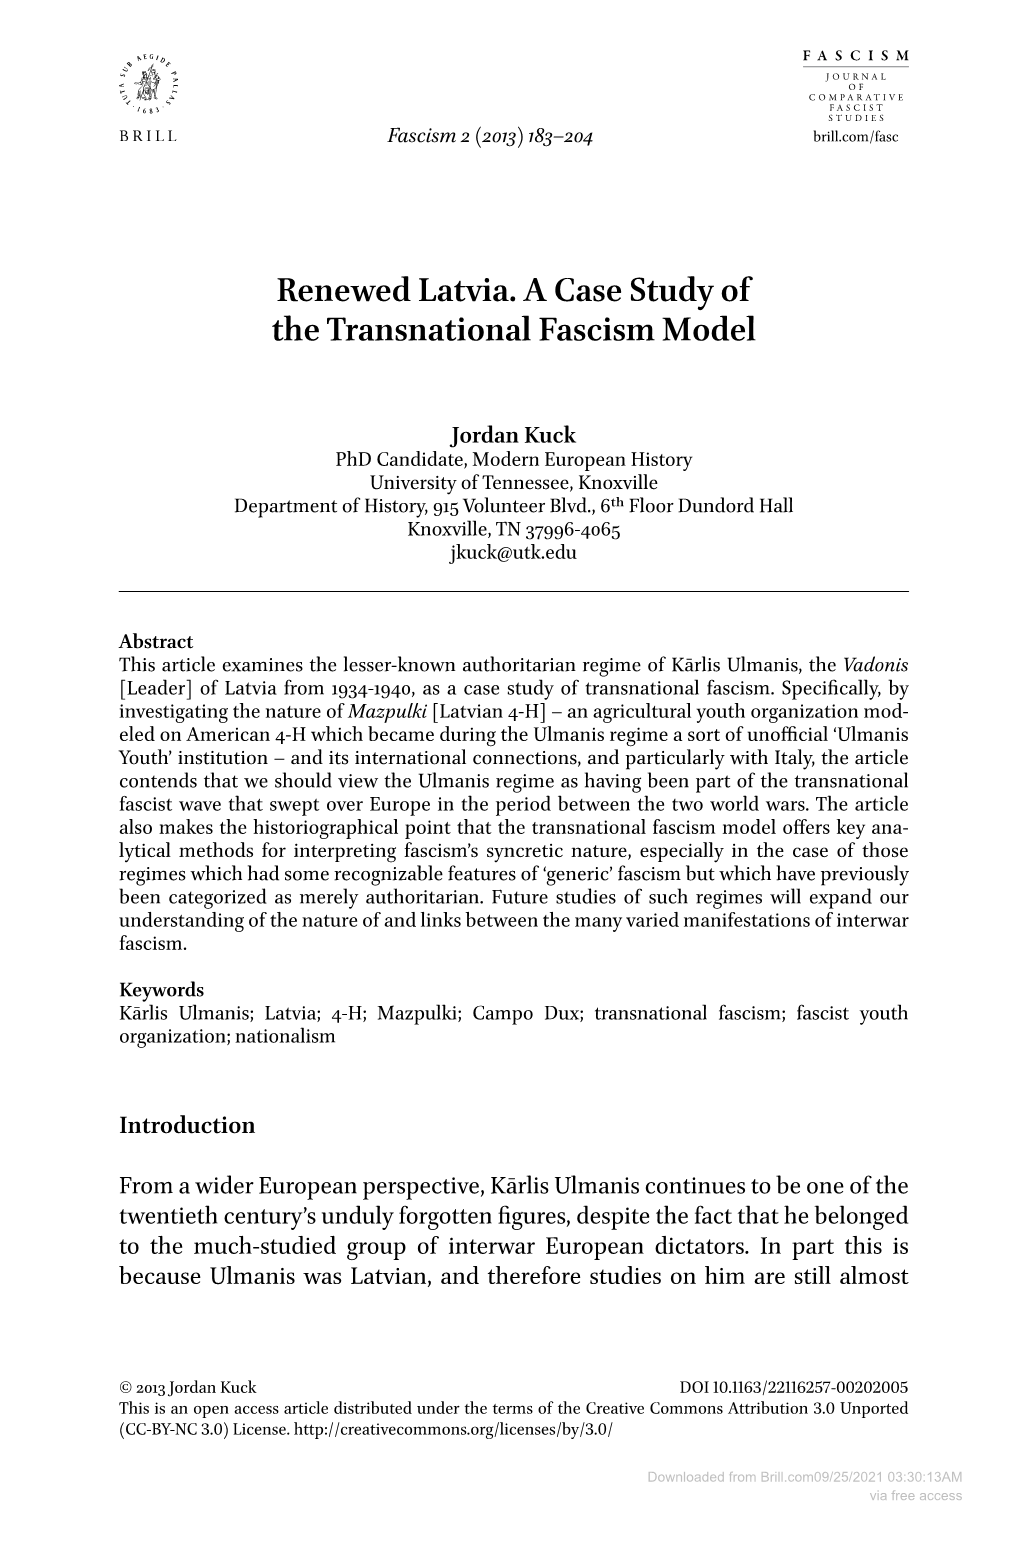 Renewed Latvia. a Case Study of the Transnational Fascism Model